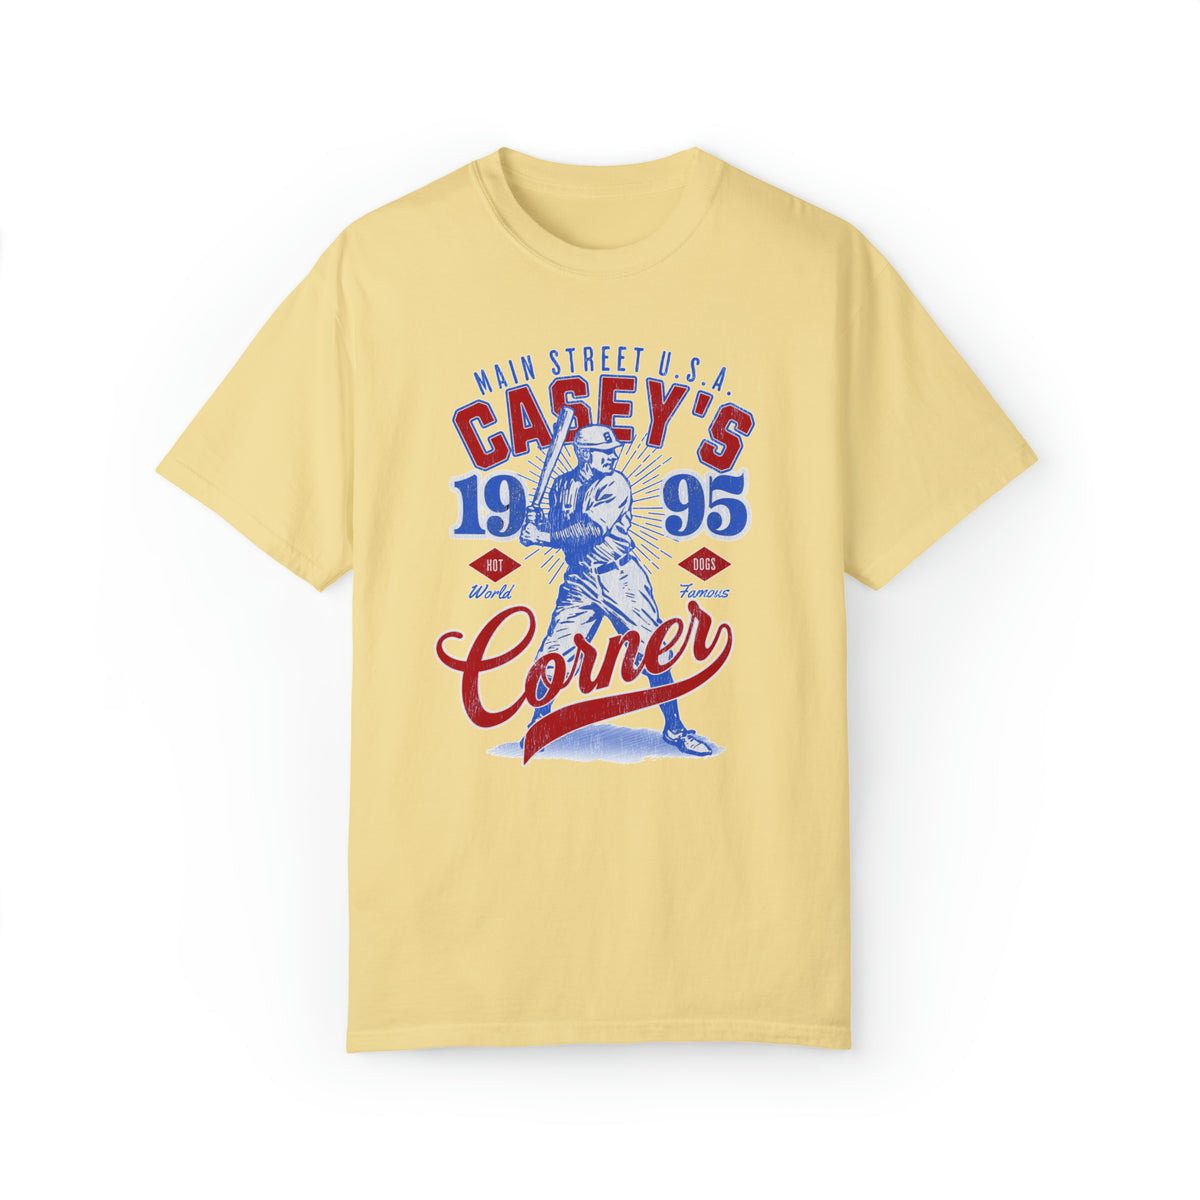 Casey’s Corner Distressed Comfort Colors Unisex Garment-Dyed T-shirt